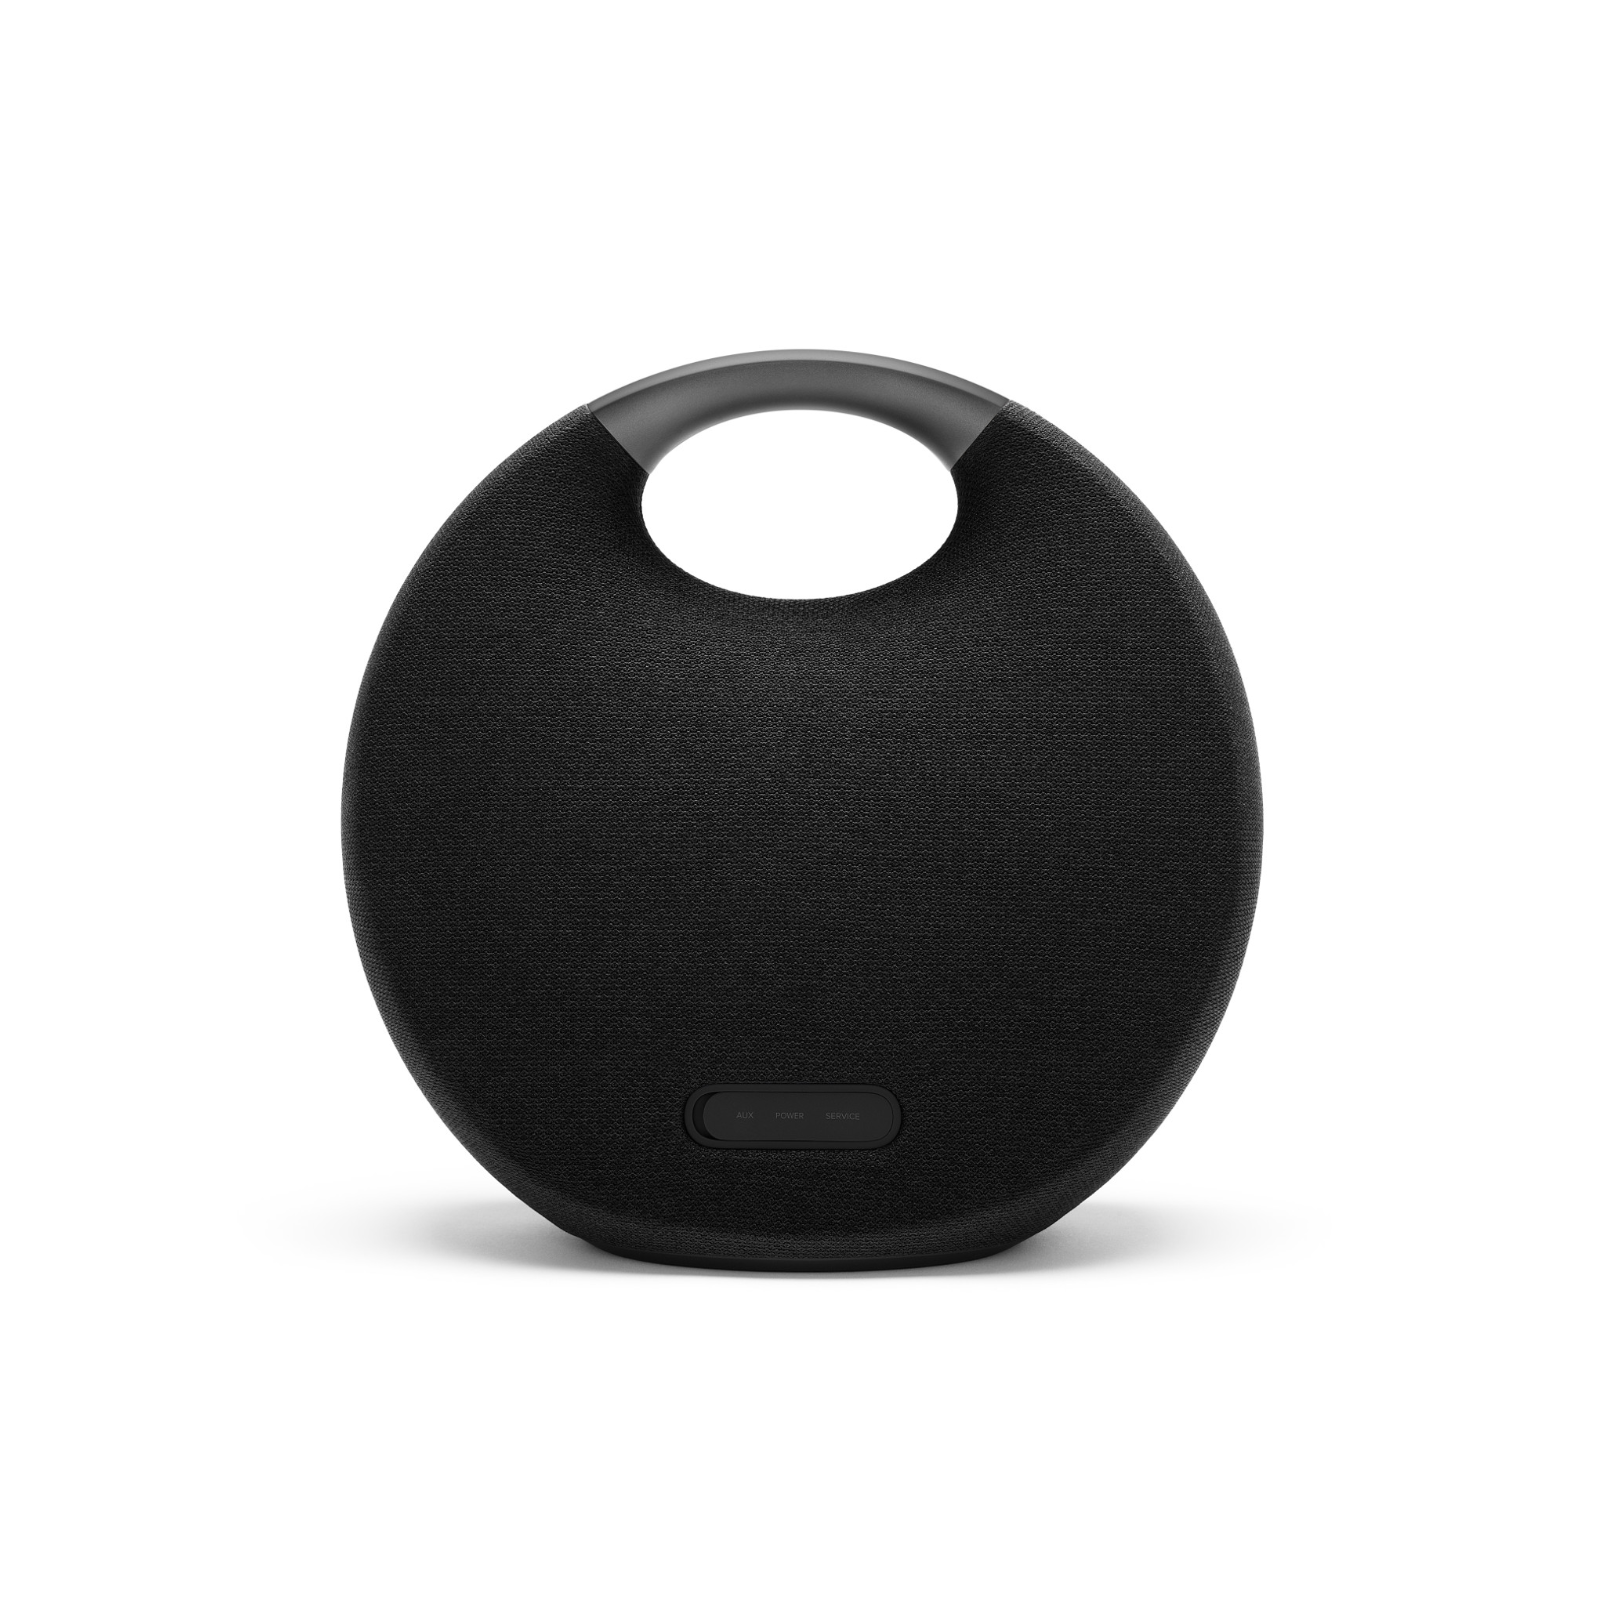 Onyx Studio 6 - Black - Portable Bluetooth speaker - Back